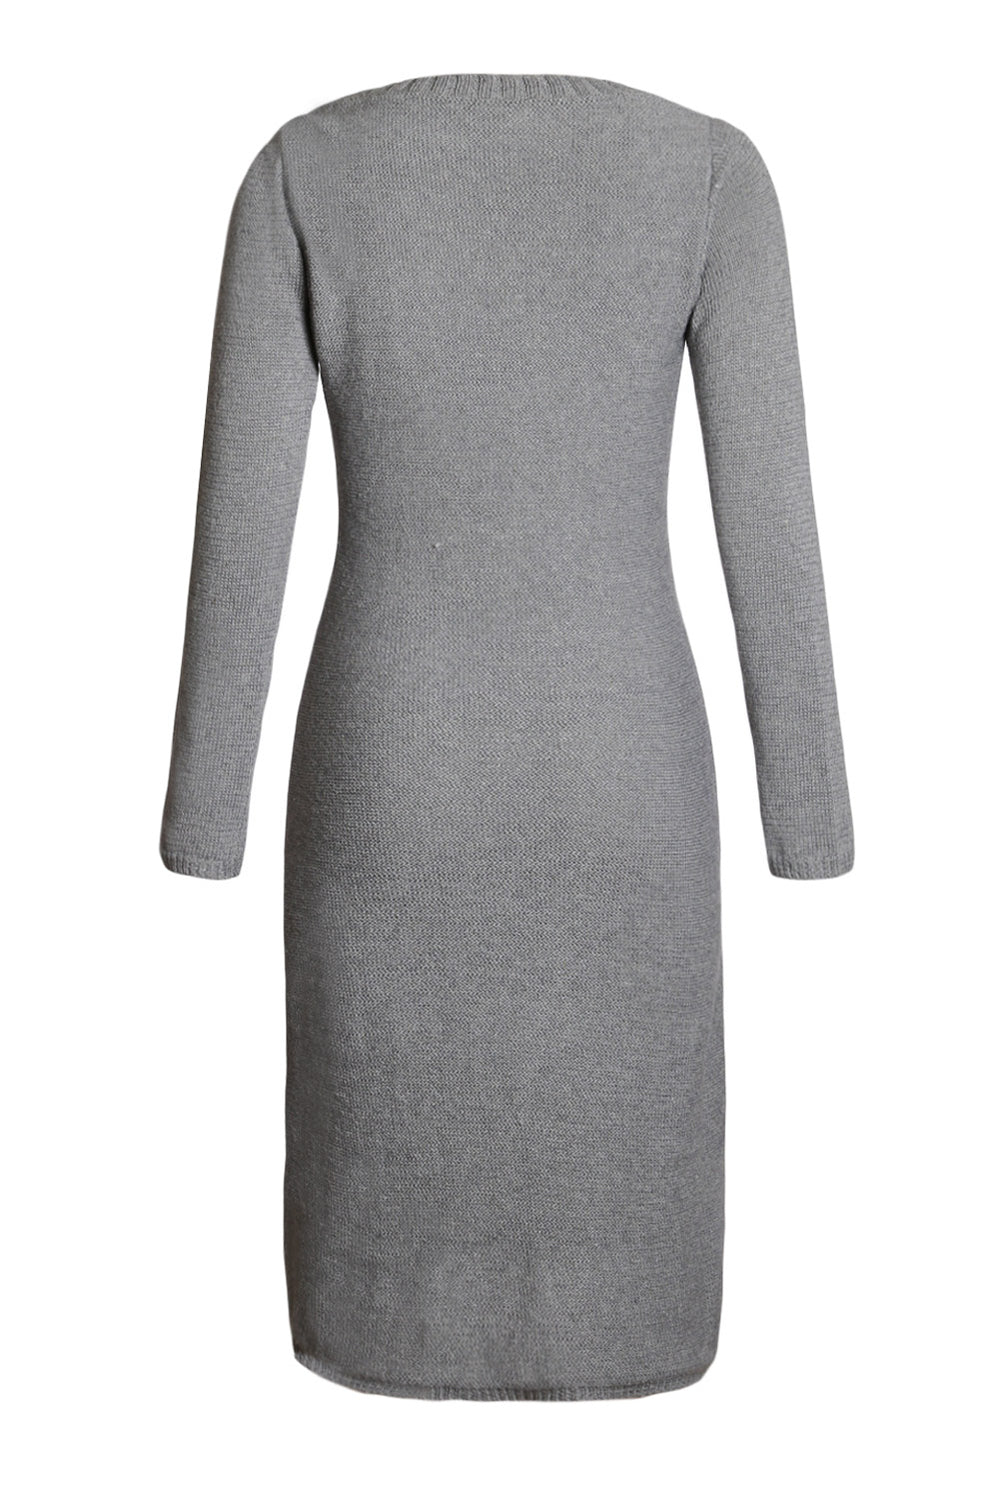 Women’s Gray Hand Knitted Sweater Dress